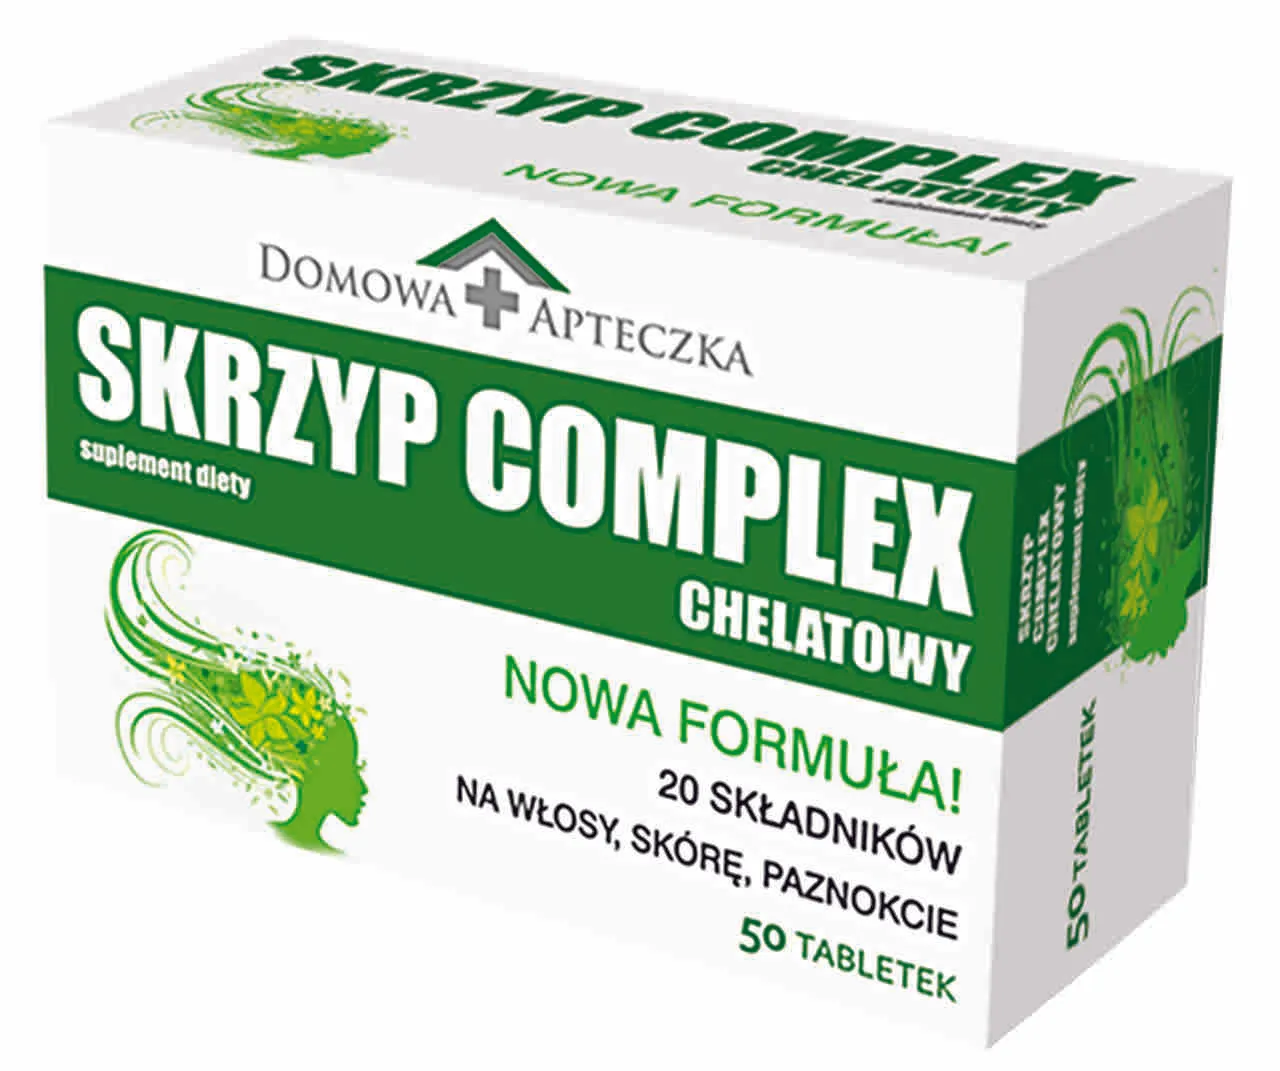 Domowa Apteczka Skrzyp Complex Chelatowany, suplement diety, 50 tabletek